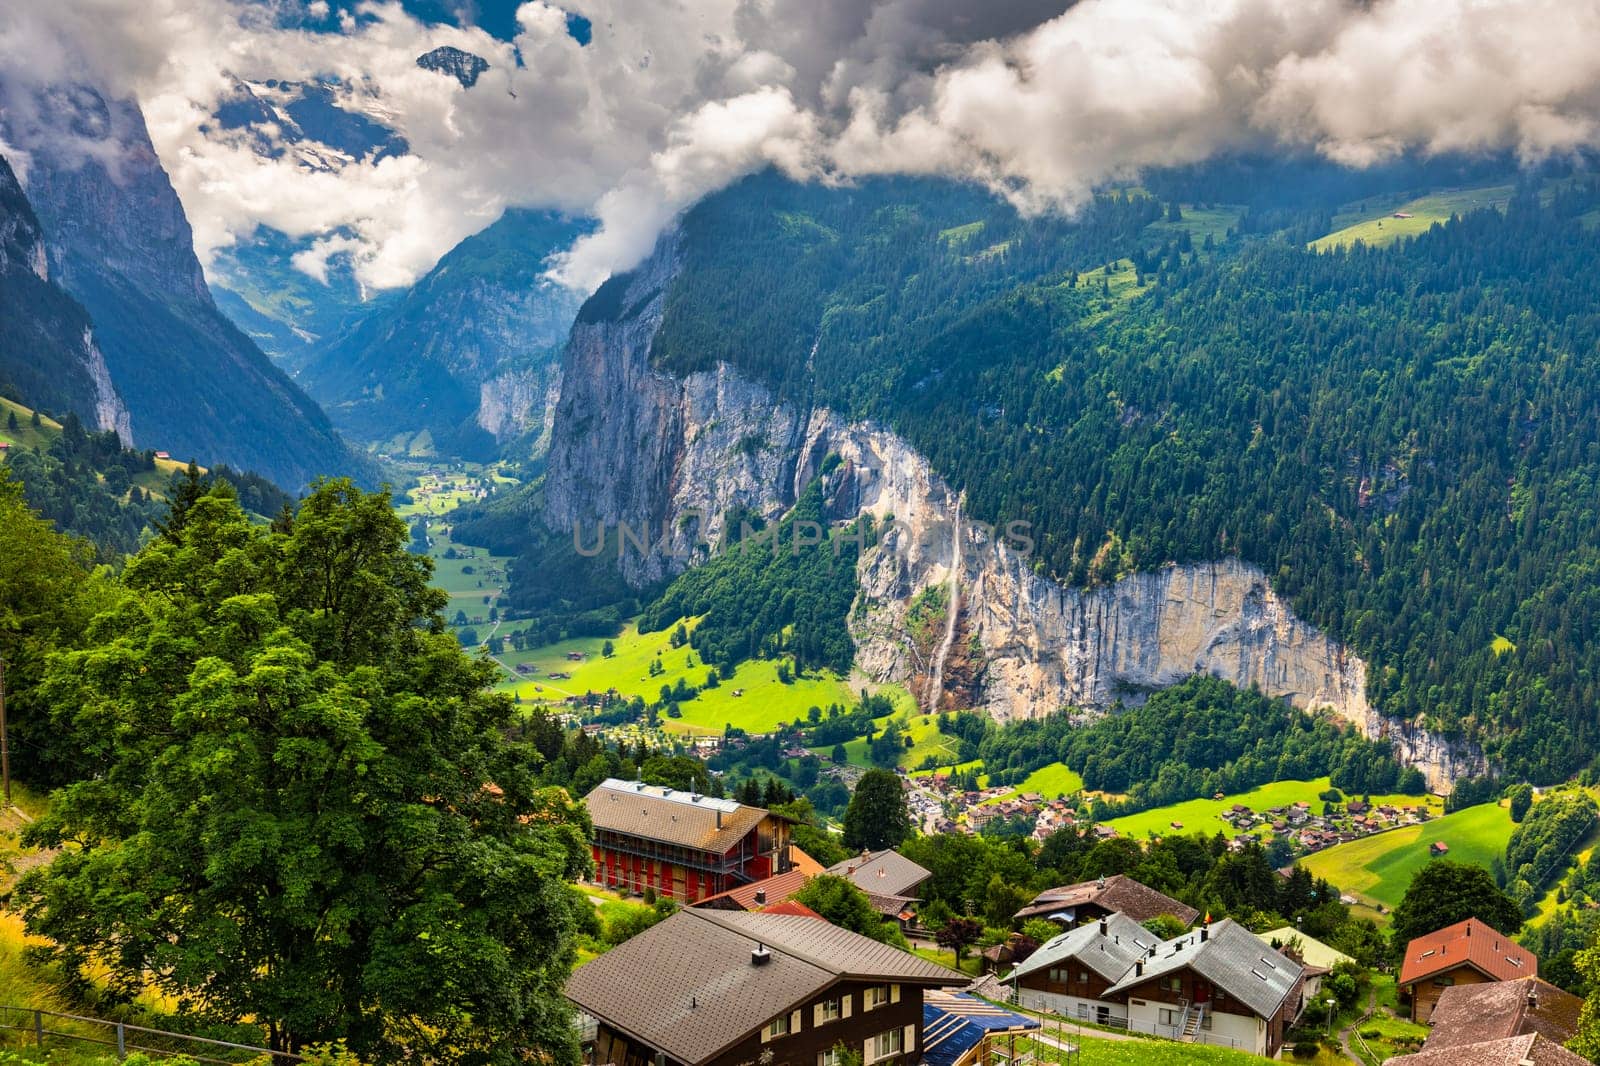 Amazing summer landscape of touristic alpine village Lauterbrunnen with famous church and Staubbach waterfall. Location: Lauterbrunnen village, Berner Oberland, Switzerland, Europe. by DaLiu